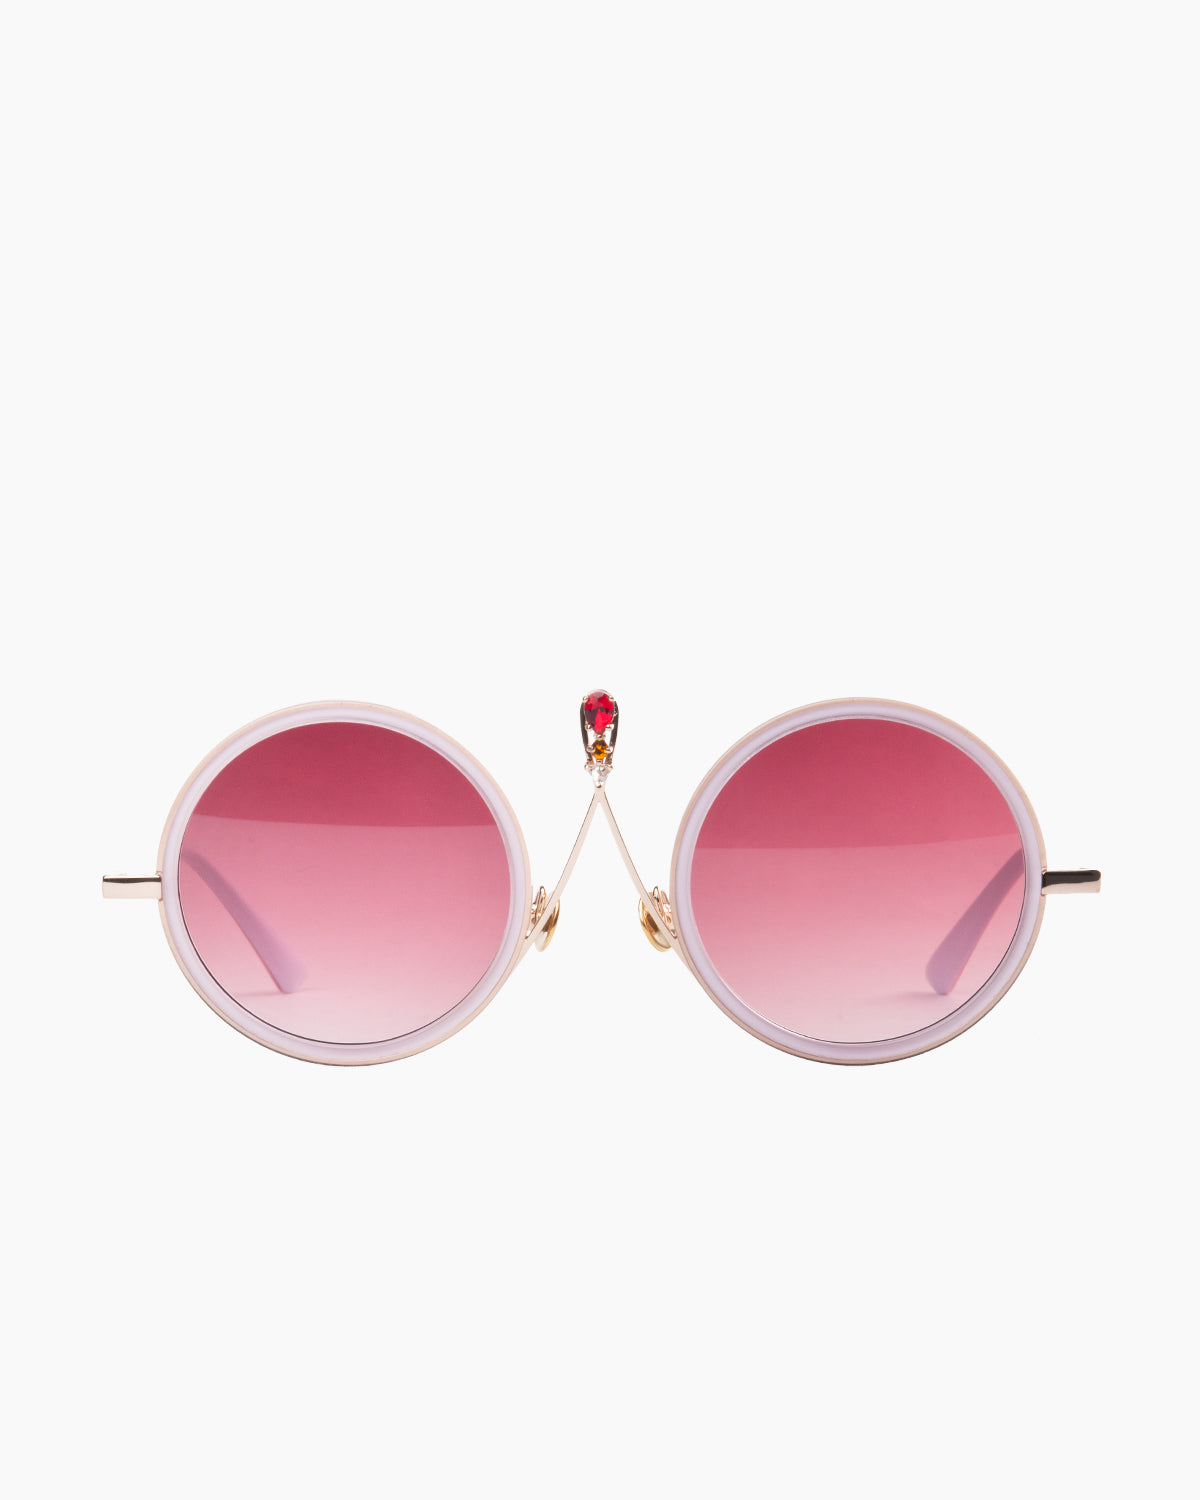 Gamine - tulum - goldd/pinkwhite | Bar à lunettes:  Marie-Sophie Dion